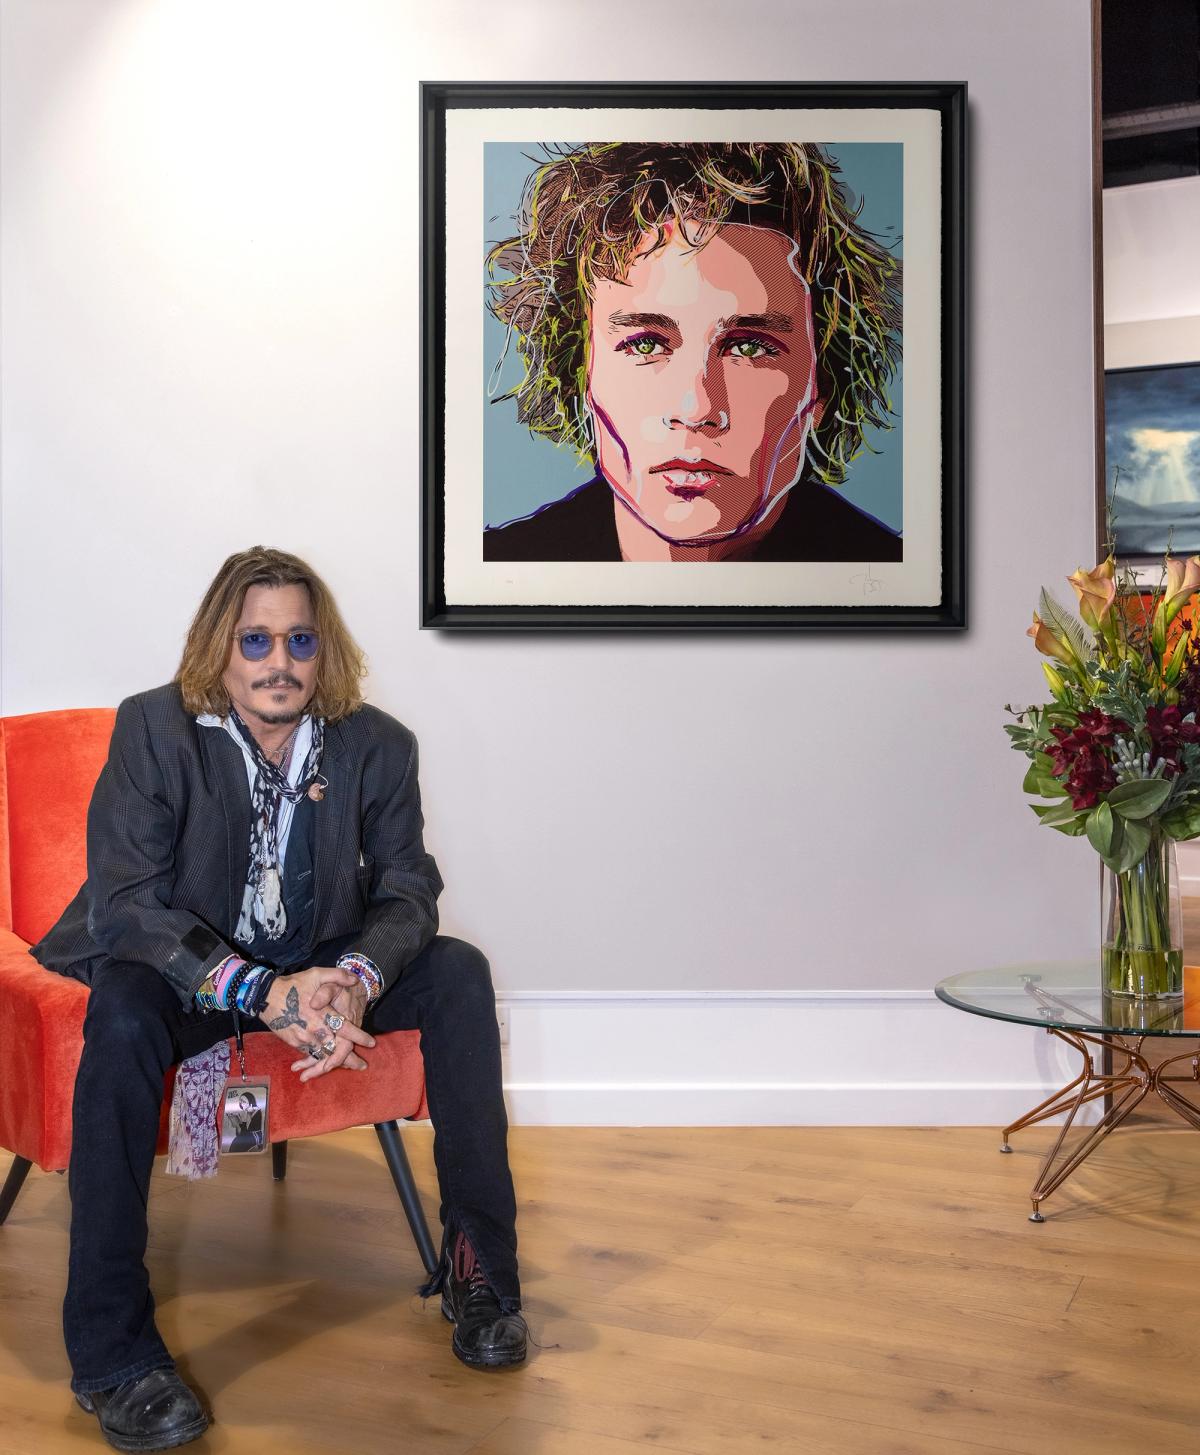 Johnny Depp with his portrait of Heath Ledger

Photo: Elliot Nyman